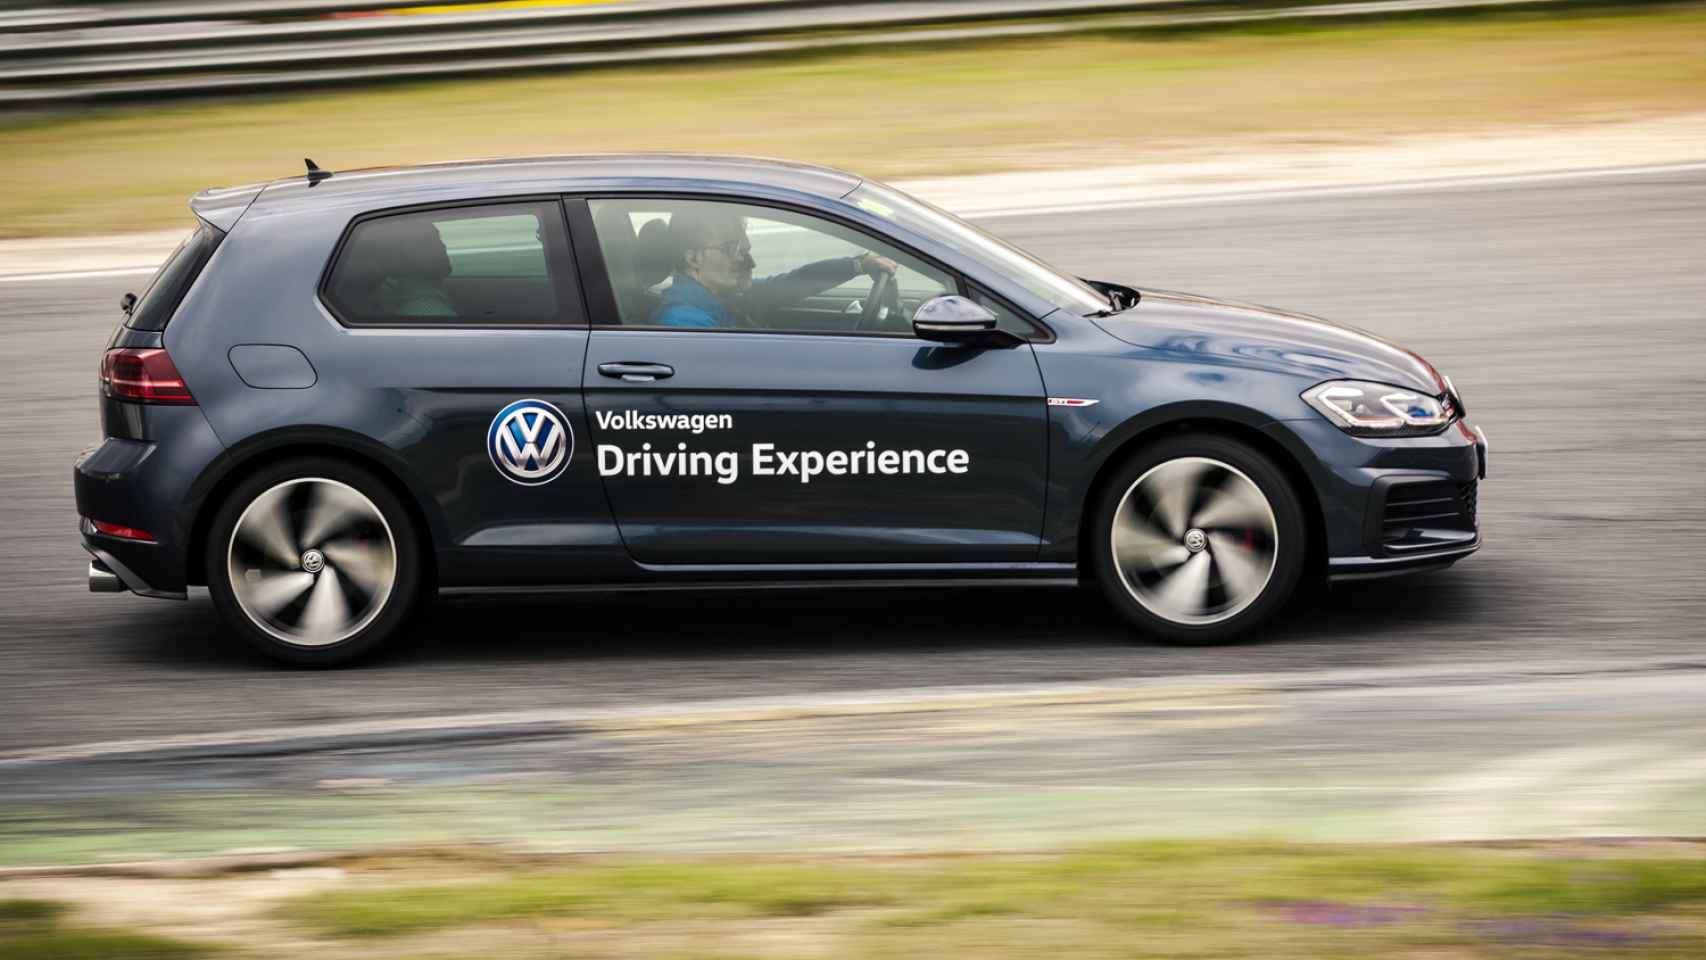 Un momento del Volkswagen Driving Experience.